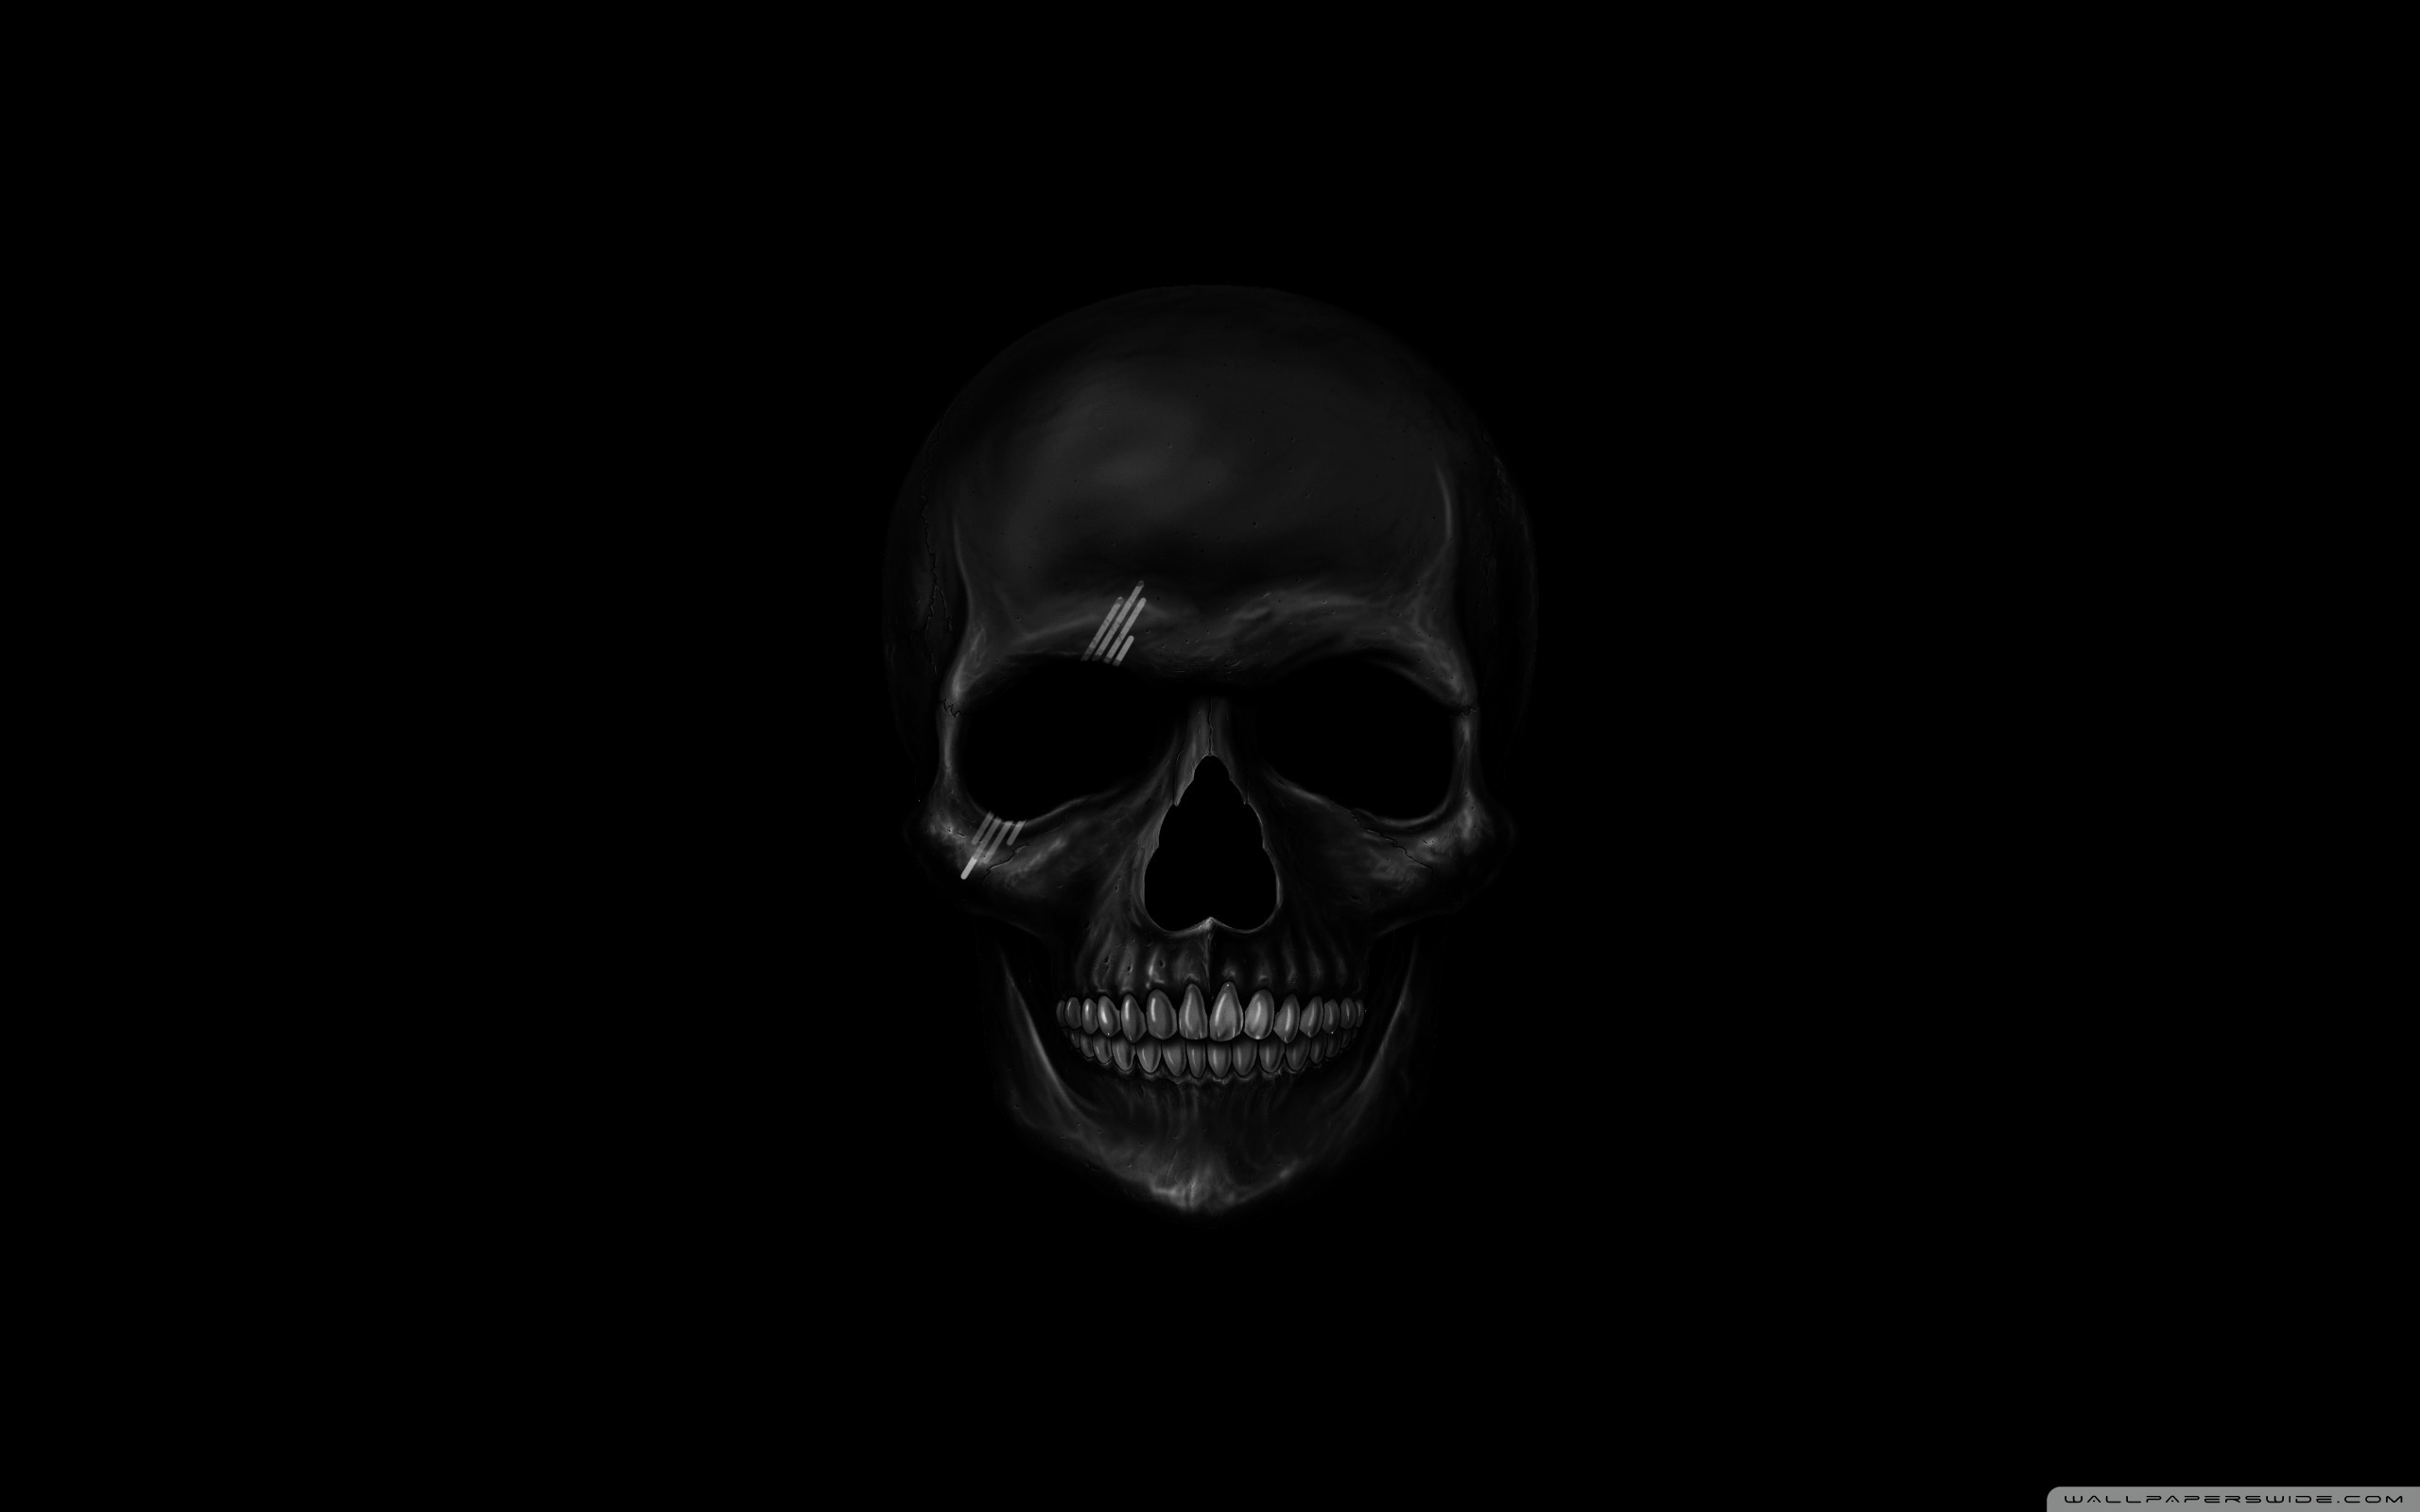 Black Skull Wallpaper 2560x1600 Wallpapers Hd Desktop And Mobile Backgrounds